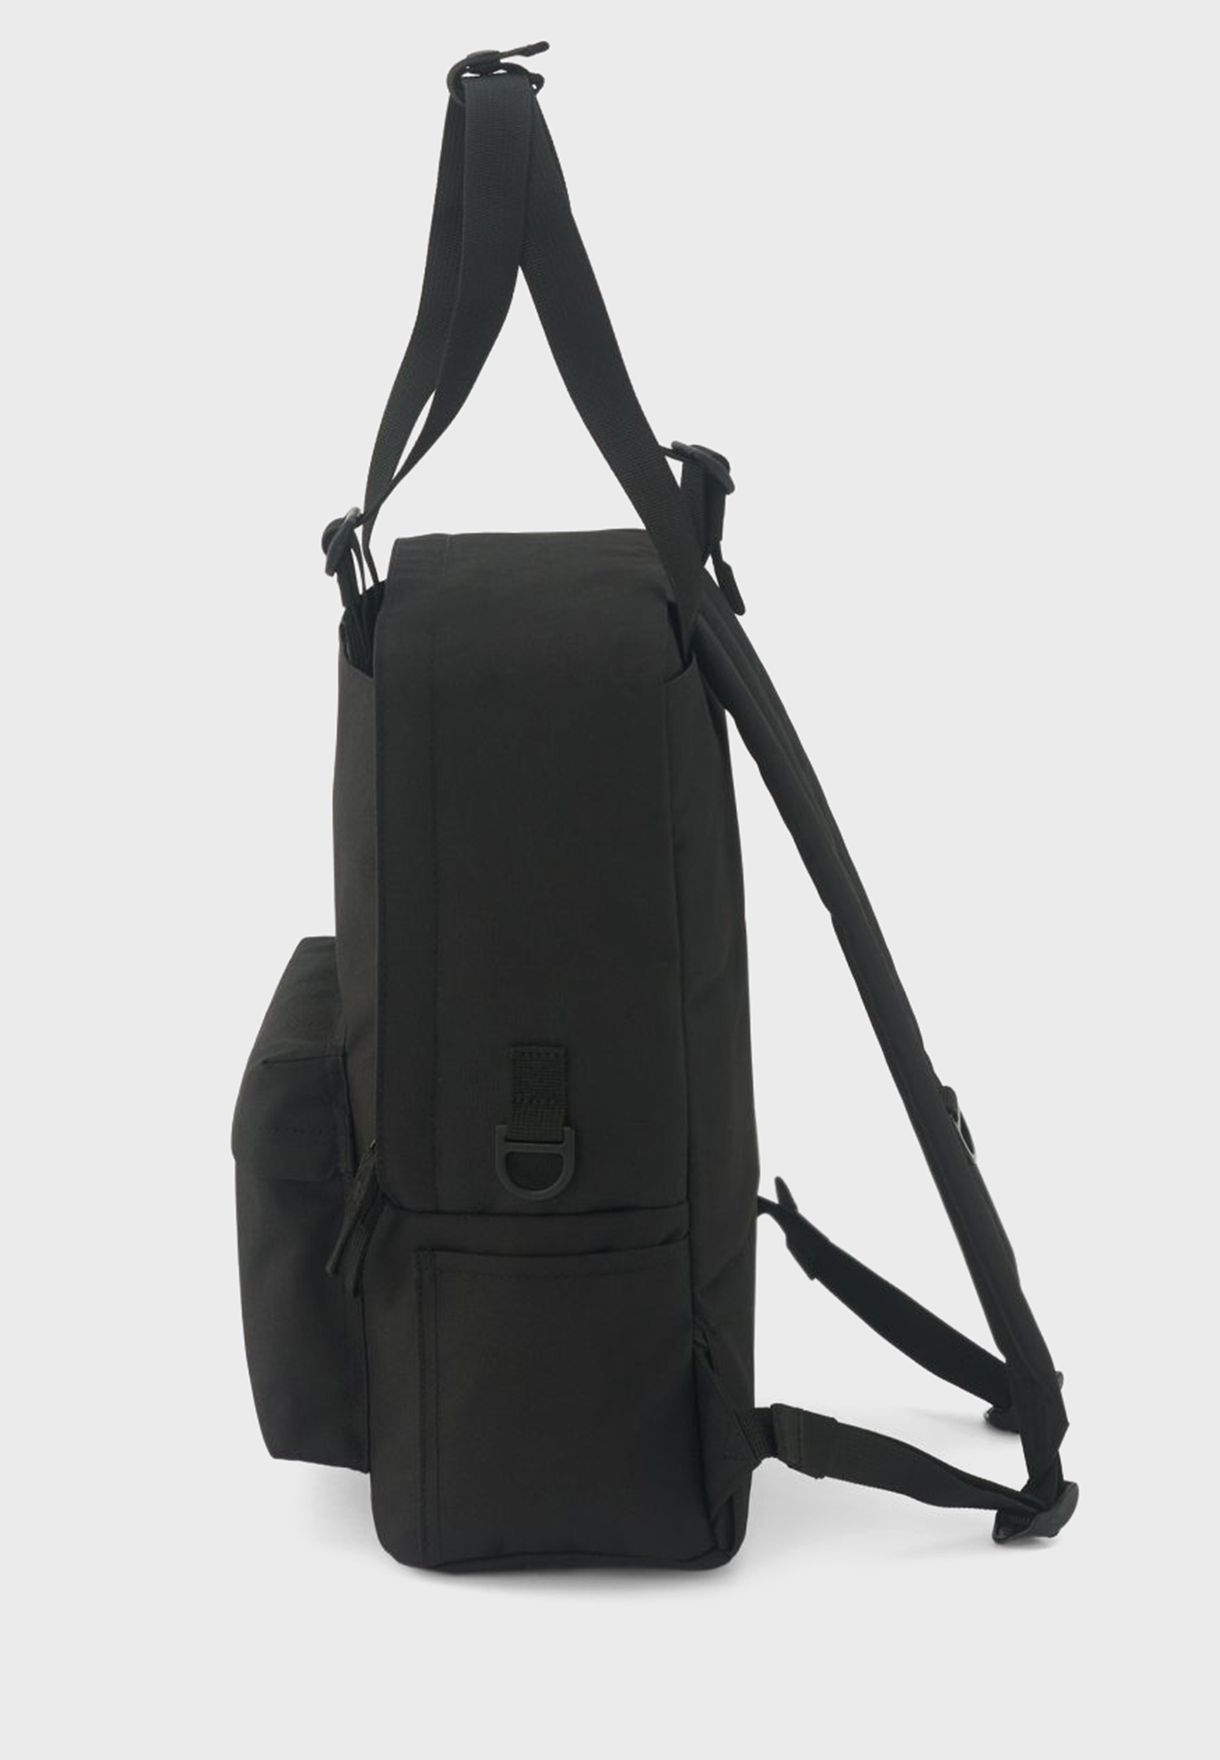 Rucksack With Adjustable Handle Backpack